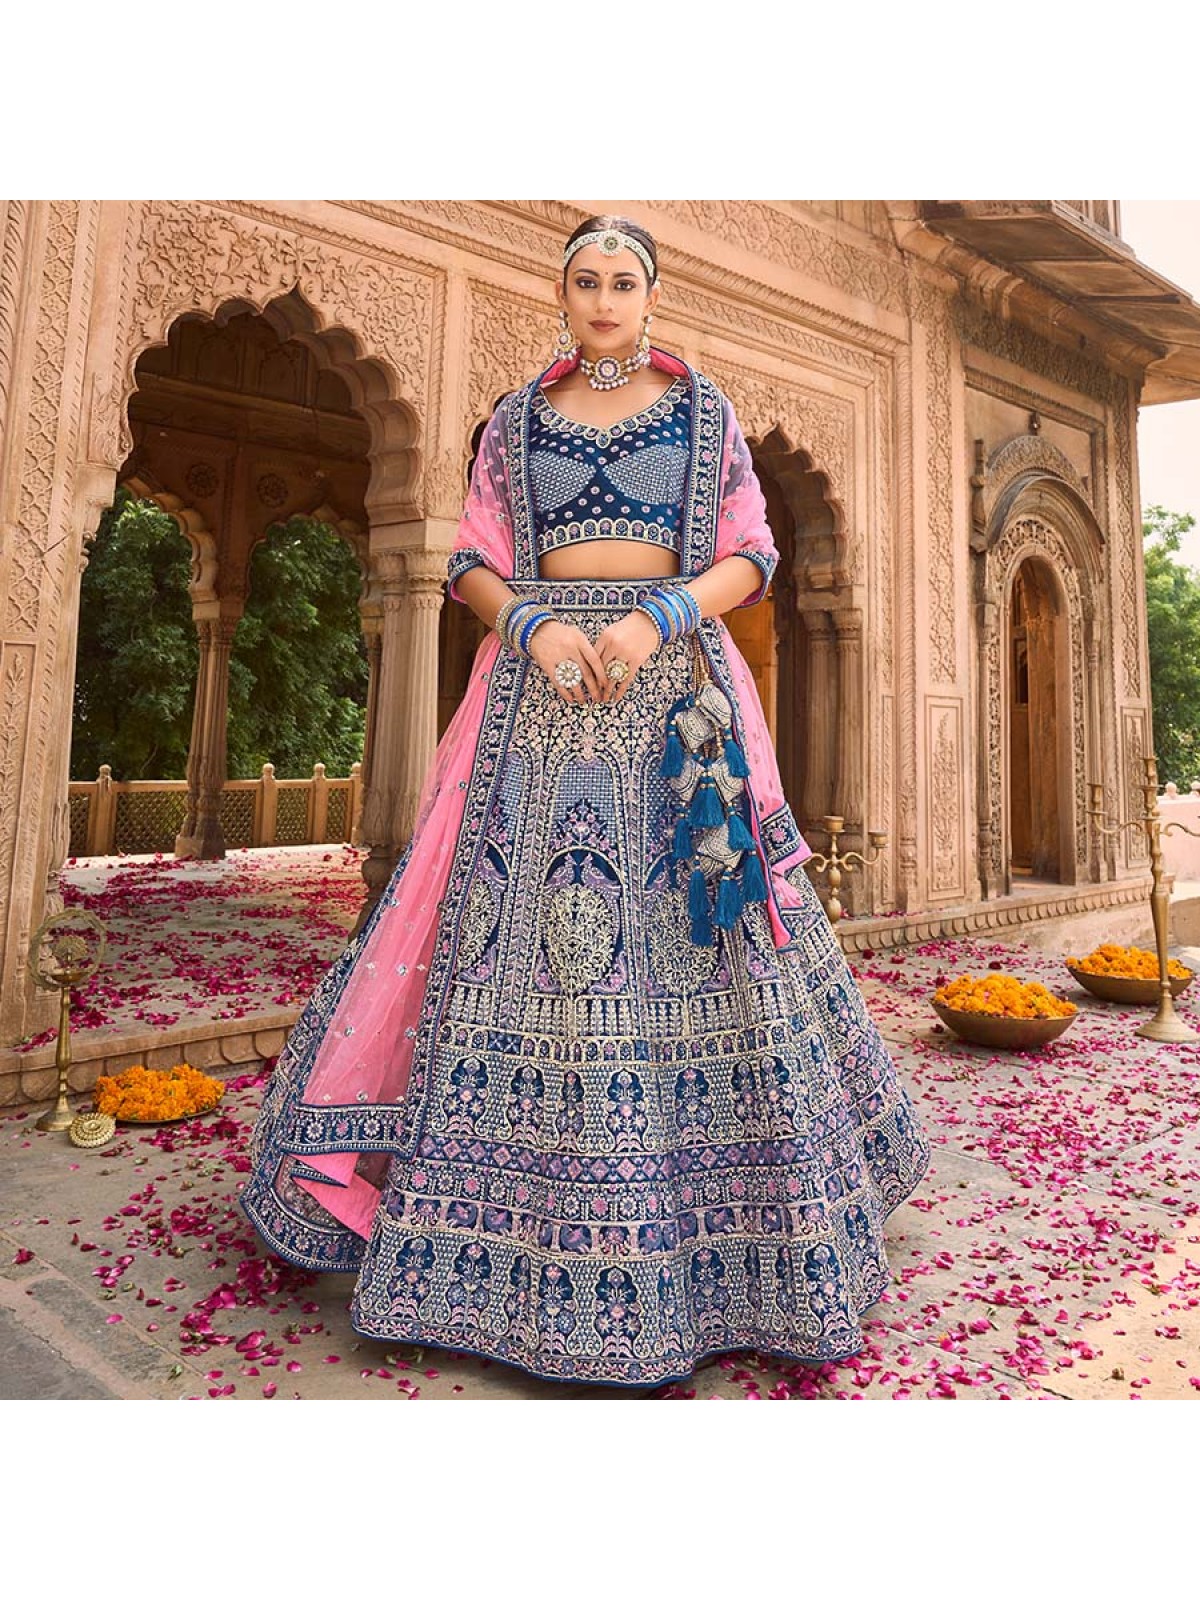 Dark Blue Lehenga Choli Wedding Lengha Skirt Top Sari Dress Sequins Work  Lehenga | eBay